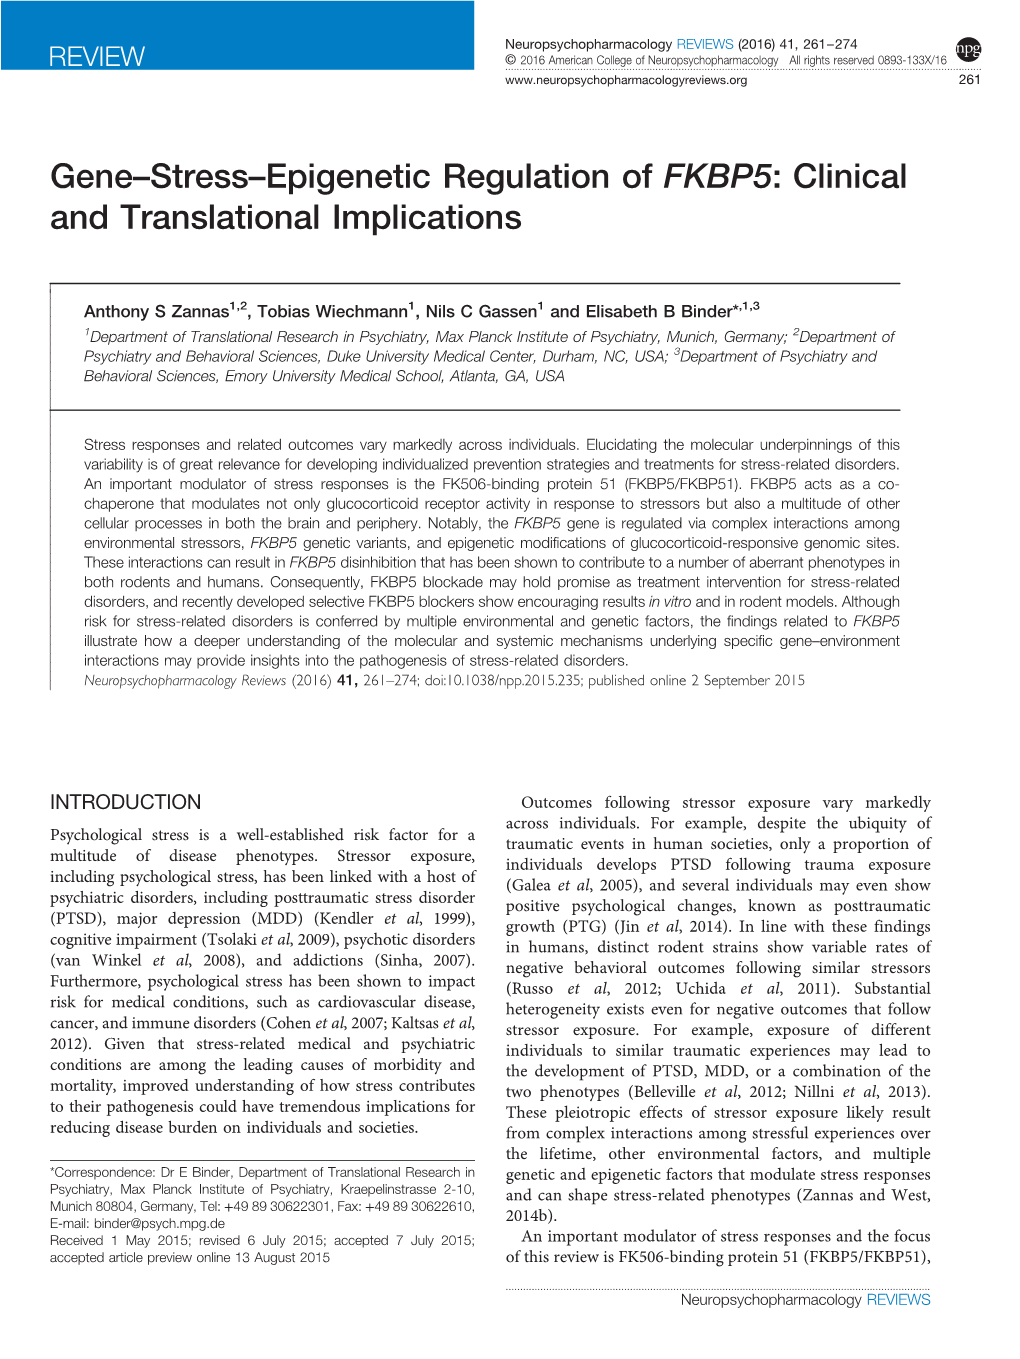 Epigenetic Regulation of FKBP5: Clinical and Translational Implications